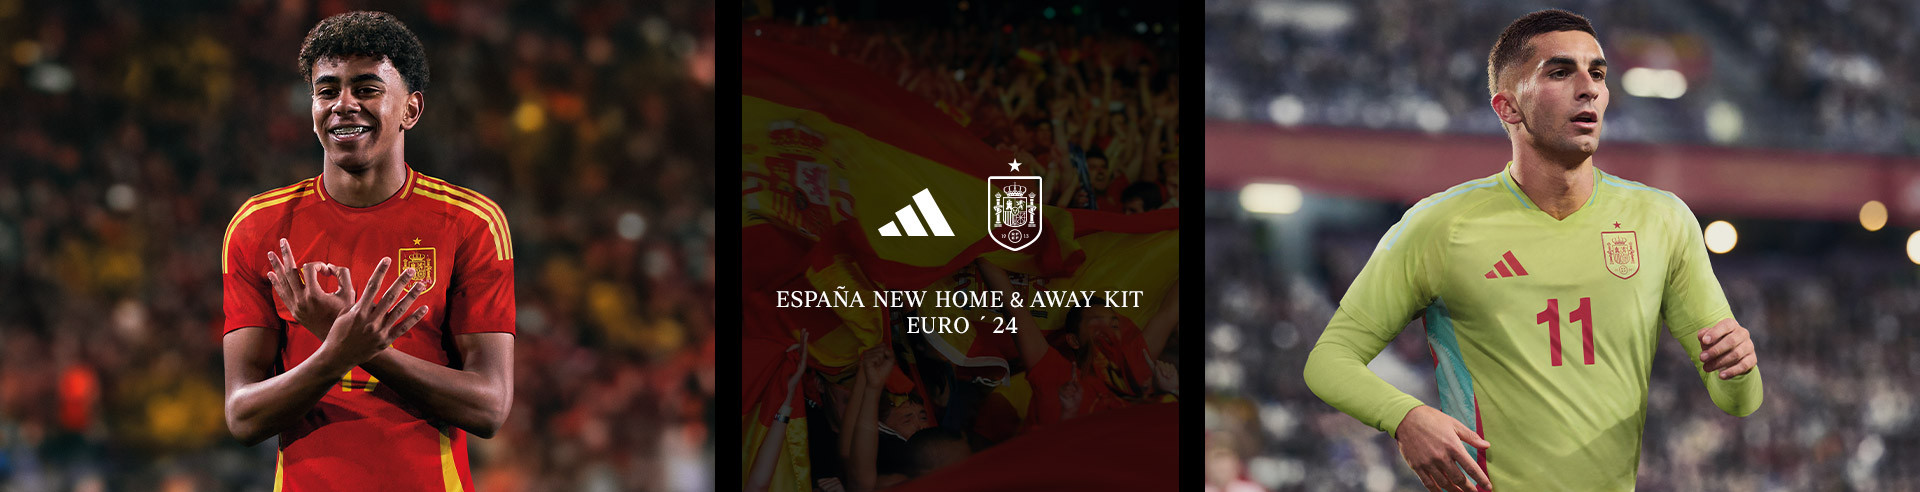 adidas espana new kit eurocopa 2024